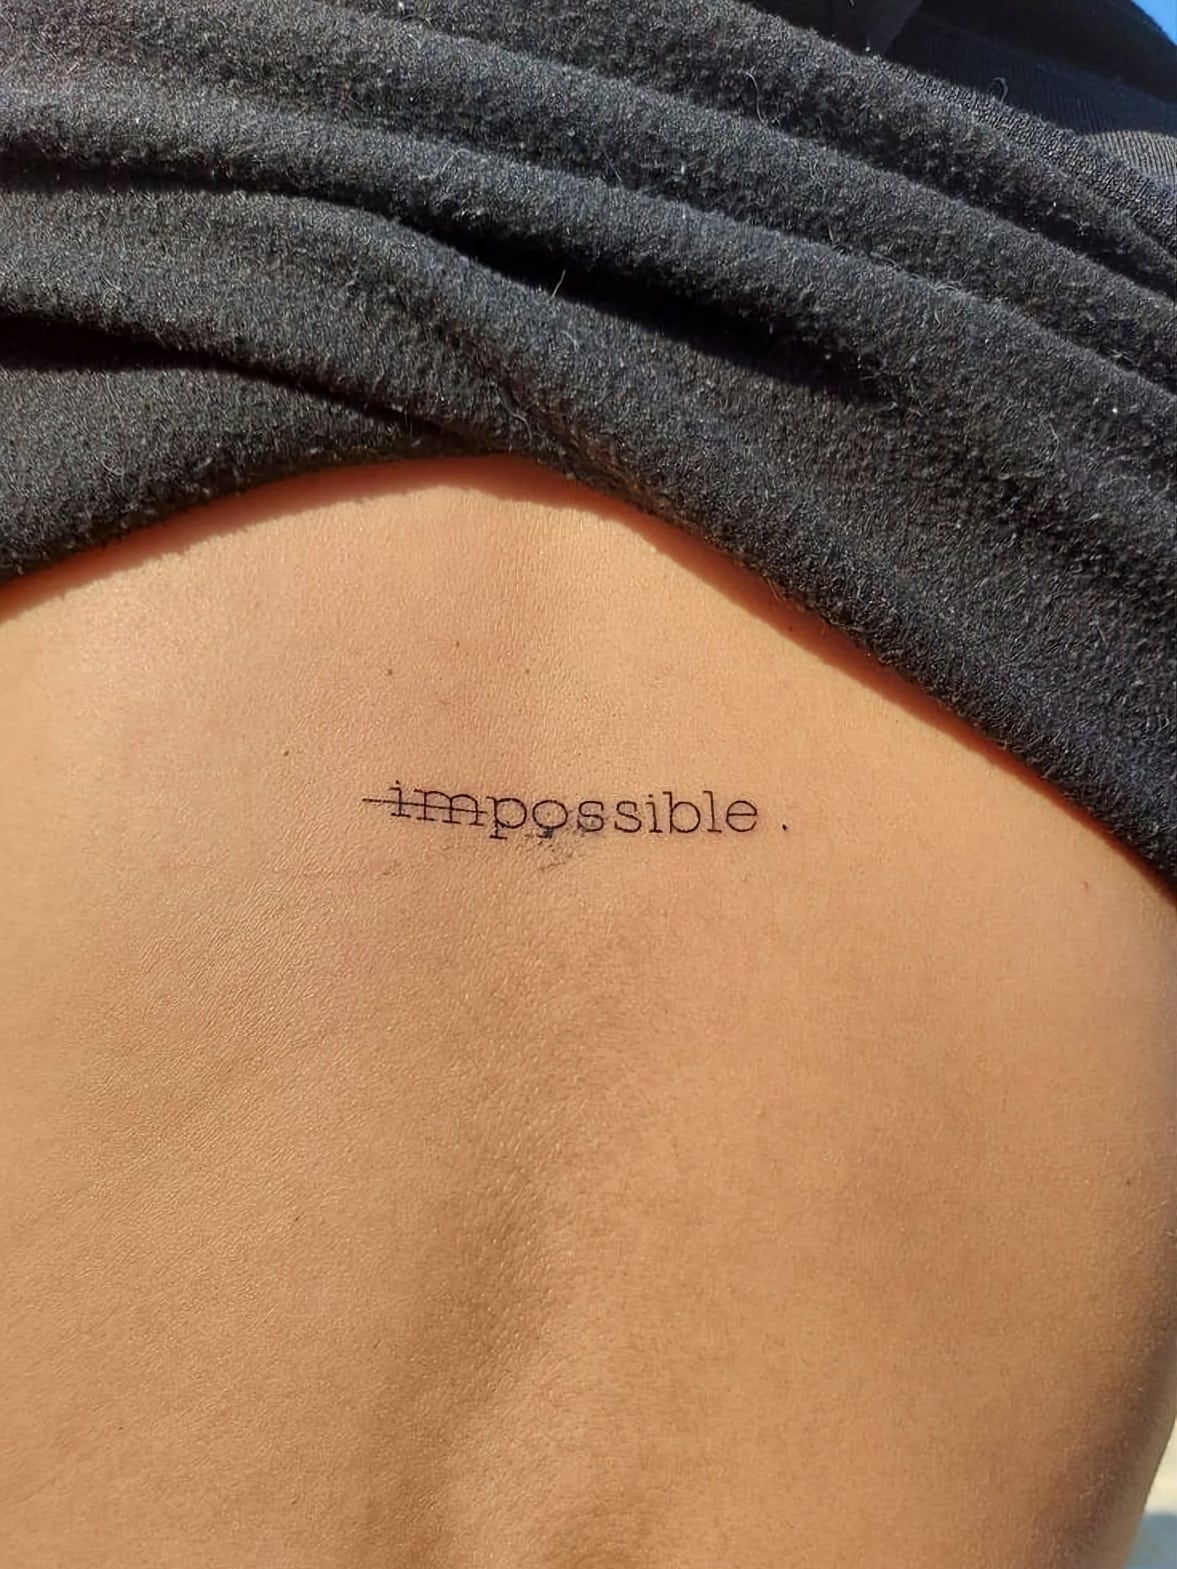 Frases para tatuarse - Imposible